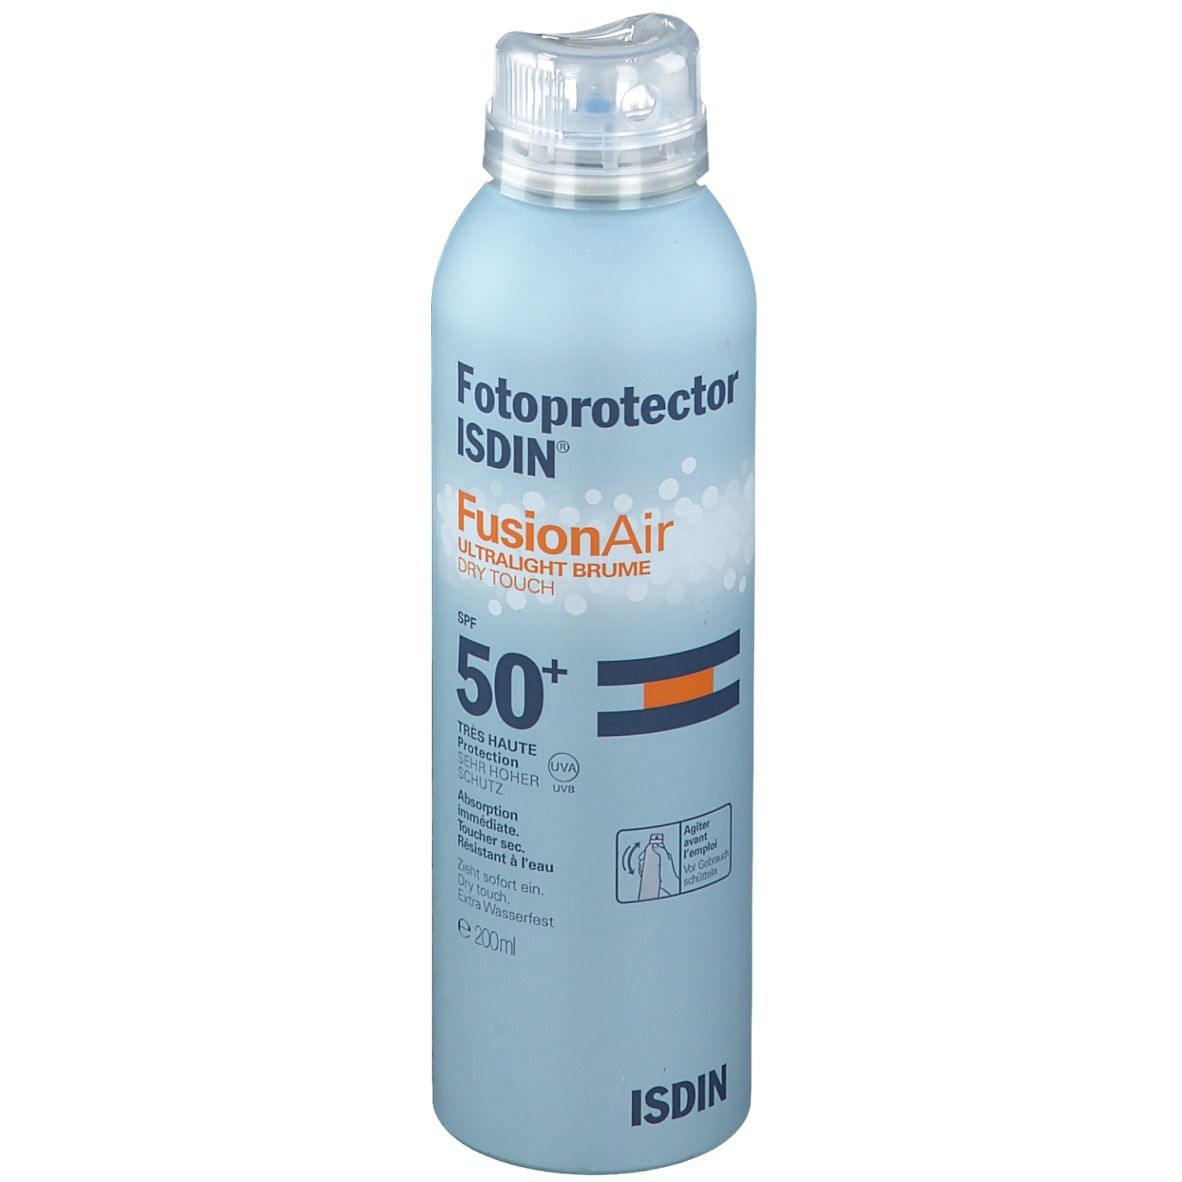 ISDIN® Fotoprotector Fusion Air SPF 50+